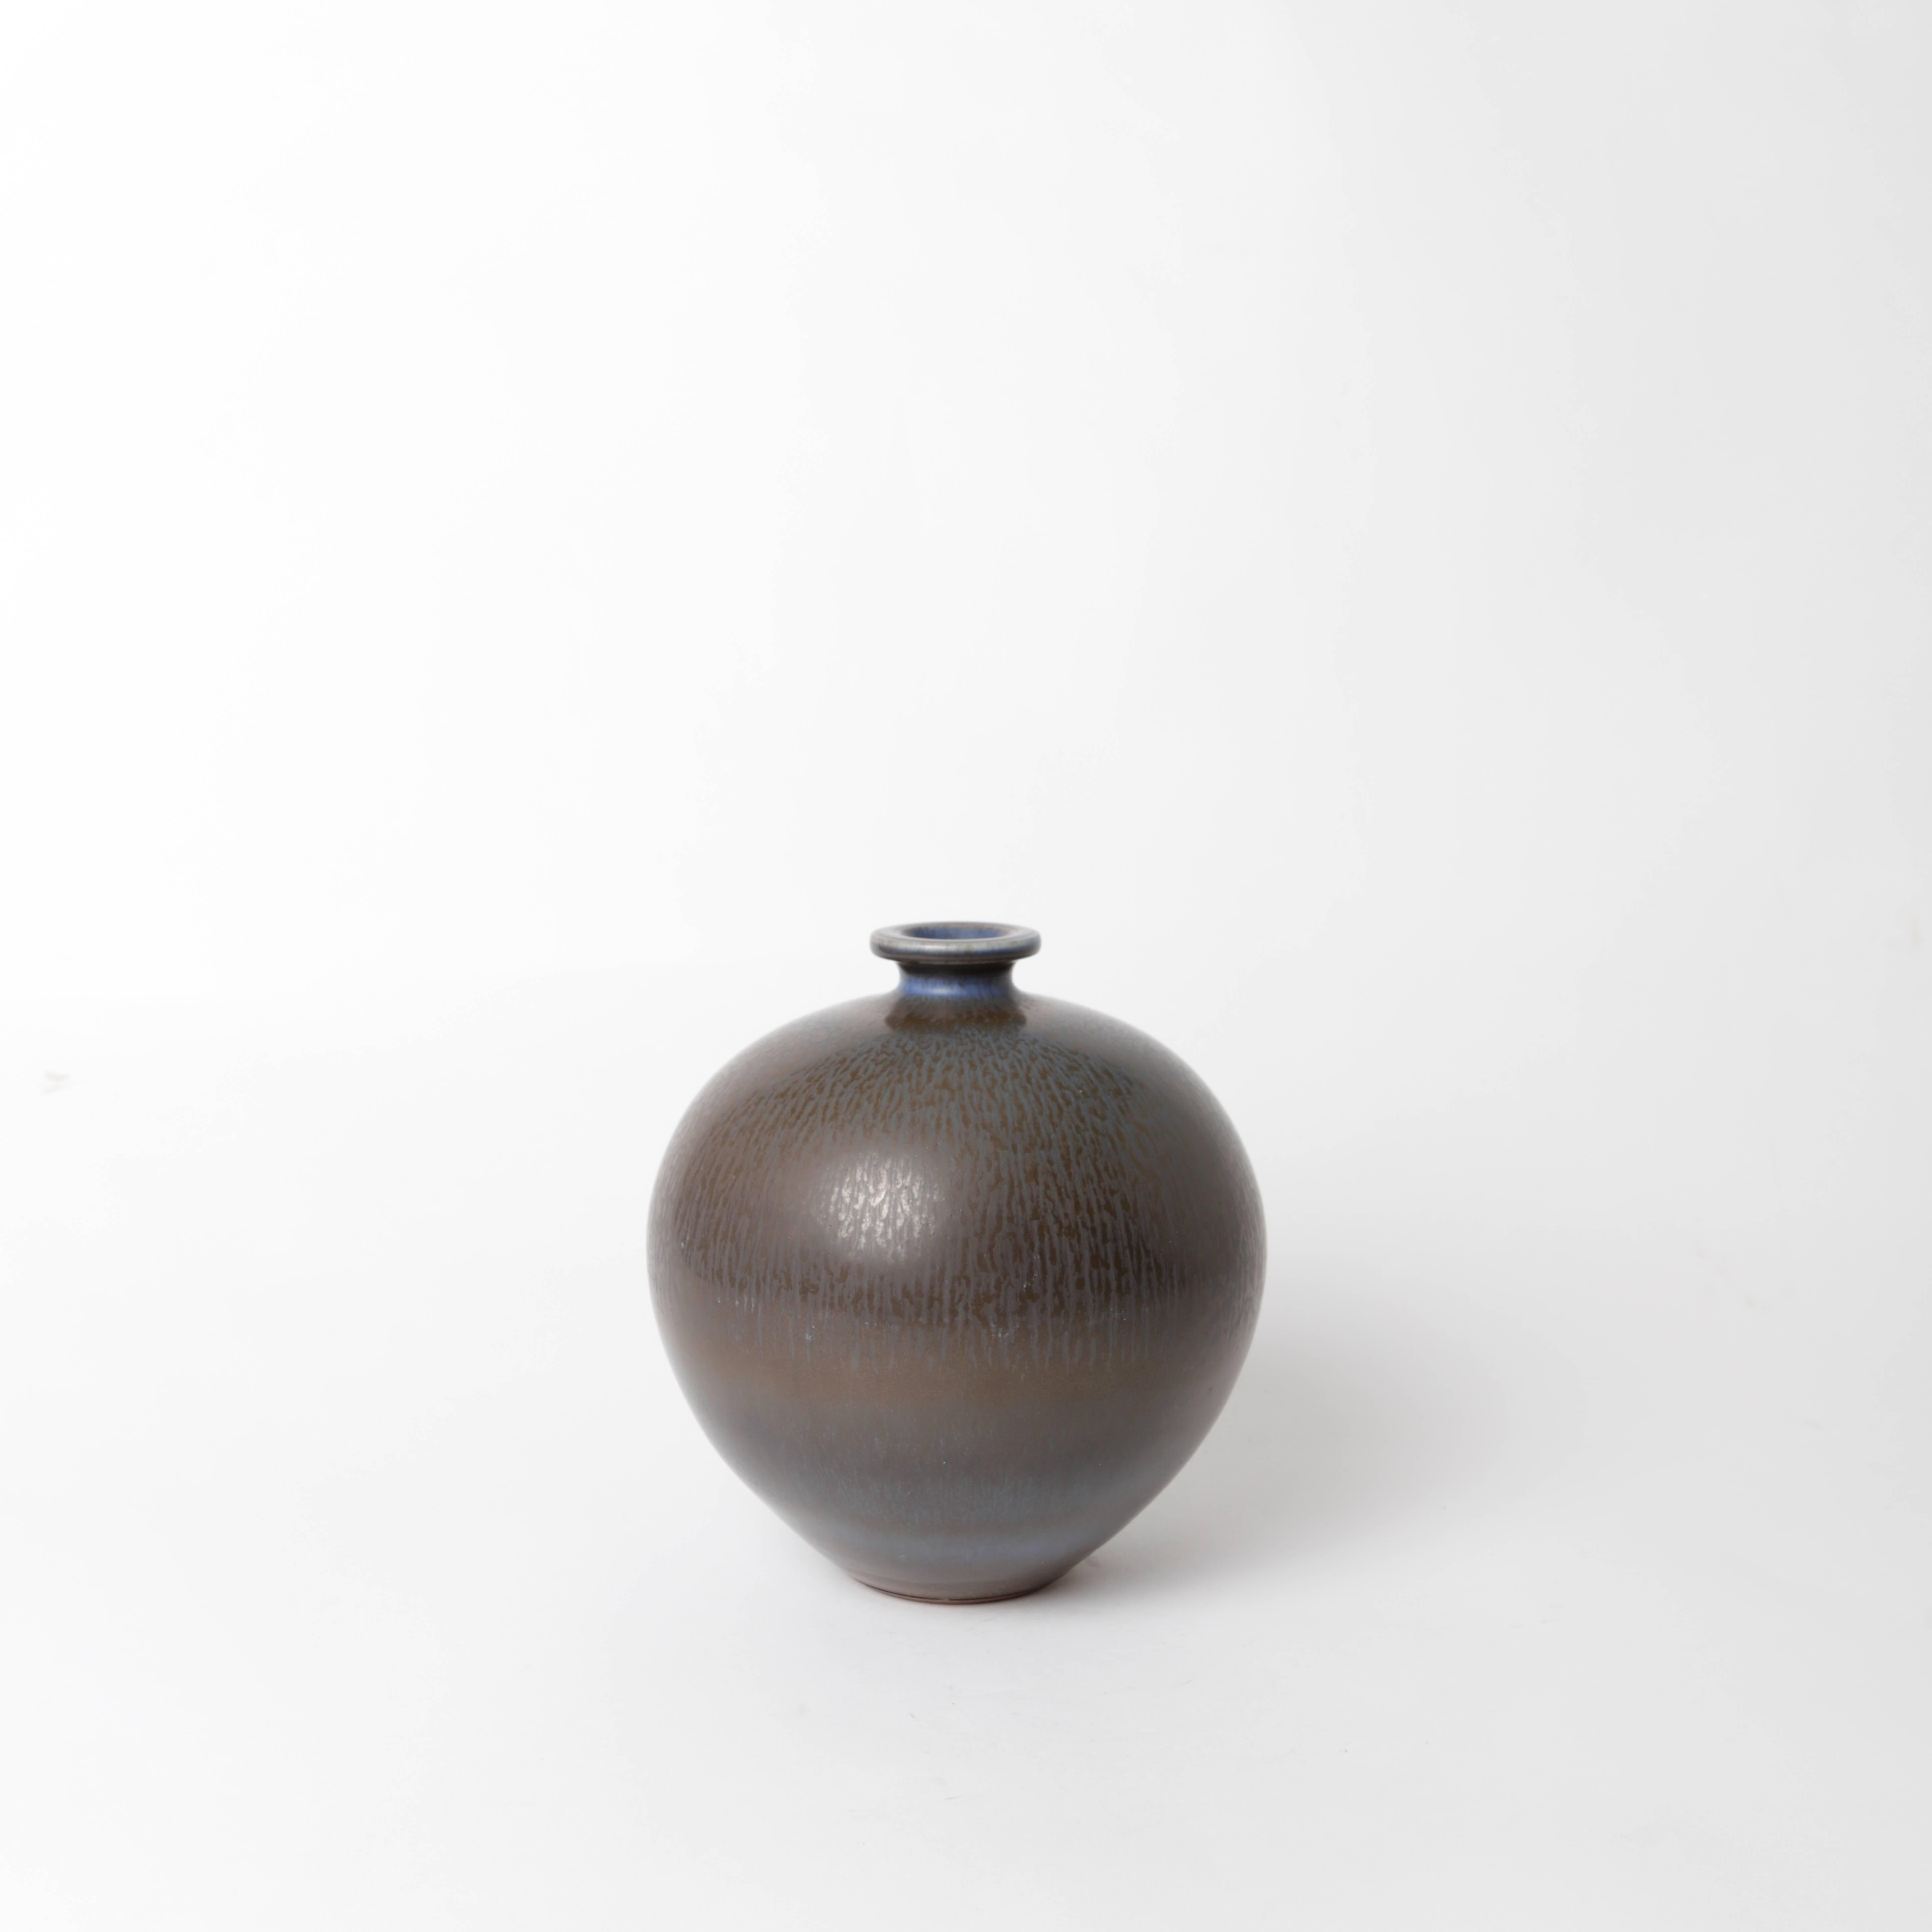 Unique stoneware vase by Berndt Friberg for Gustavsberg 1968 with harefur glaze.
Measure: Height 19 cm/ 7.5